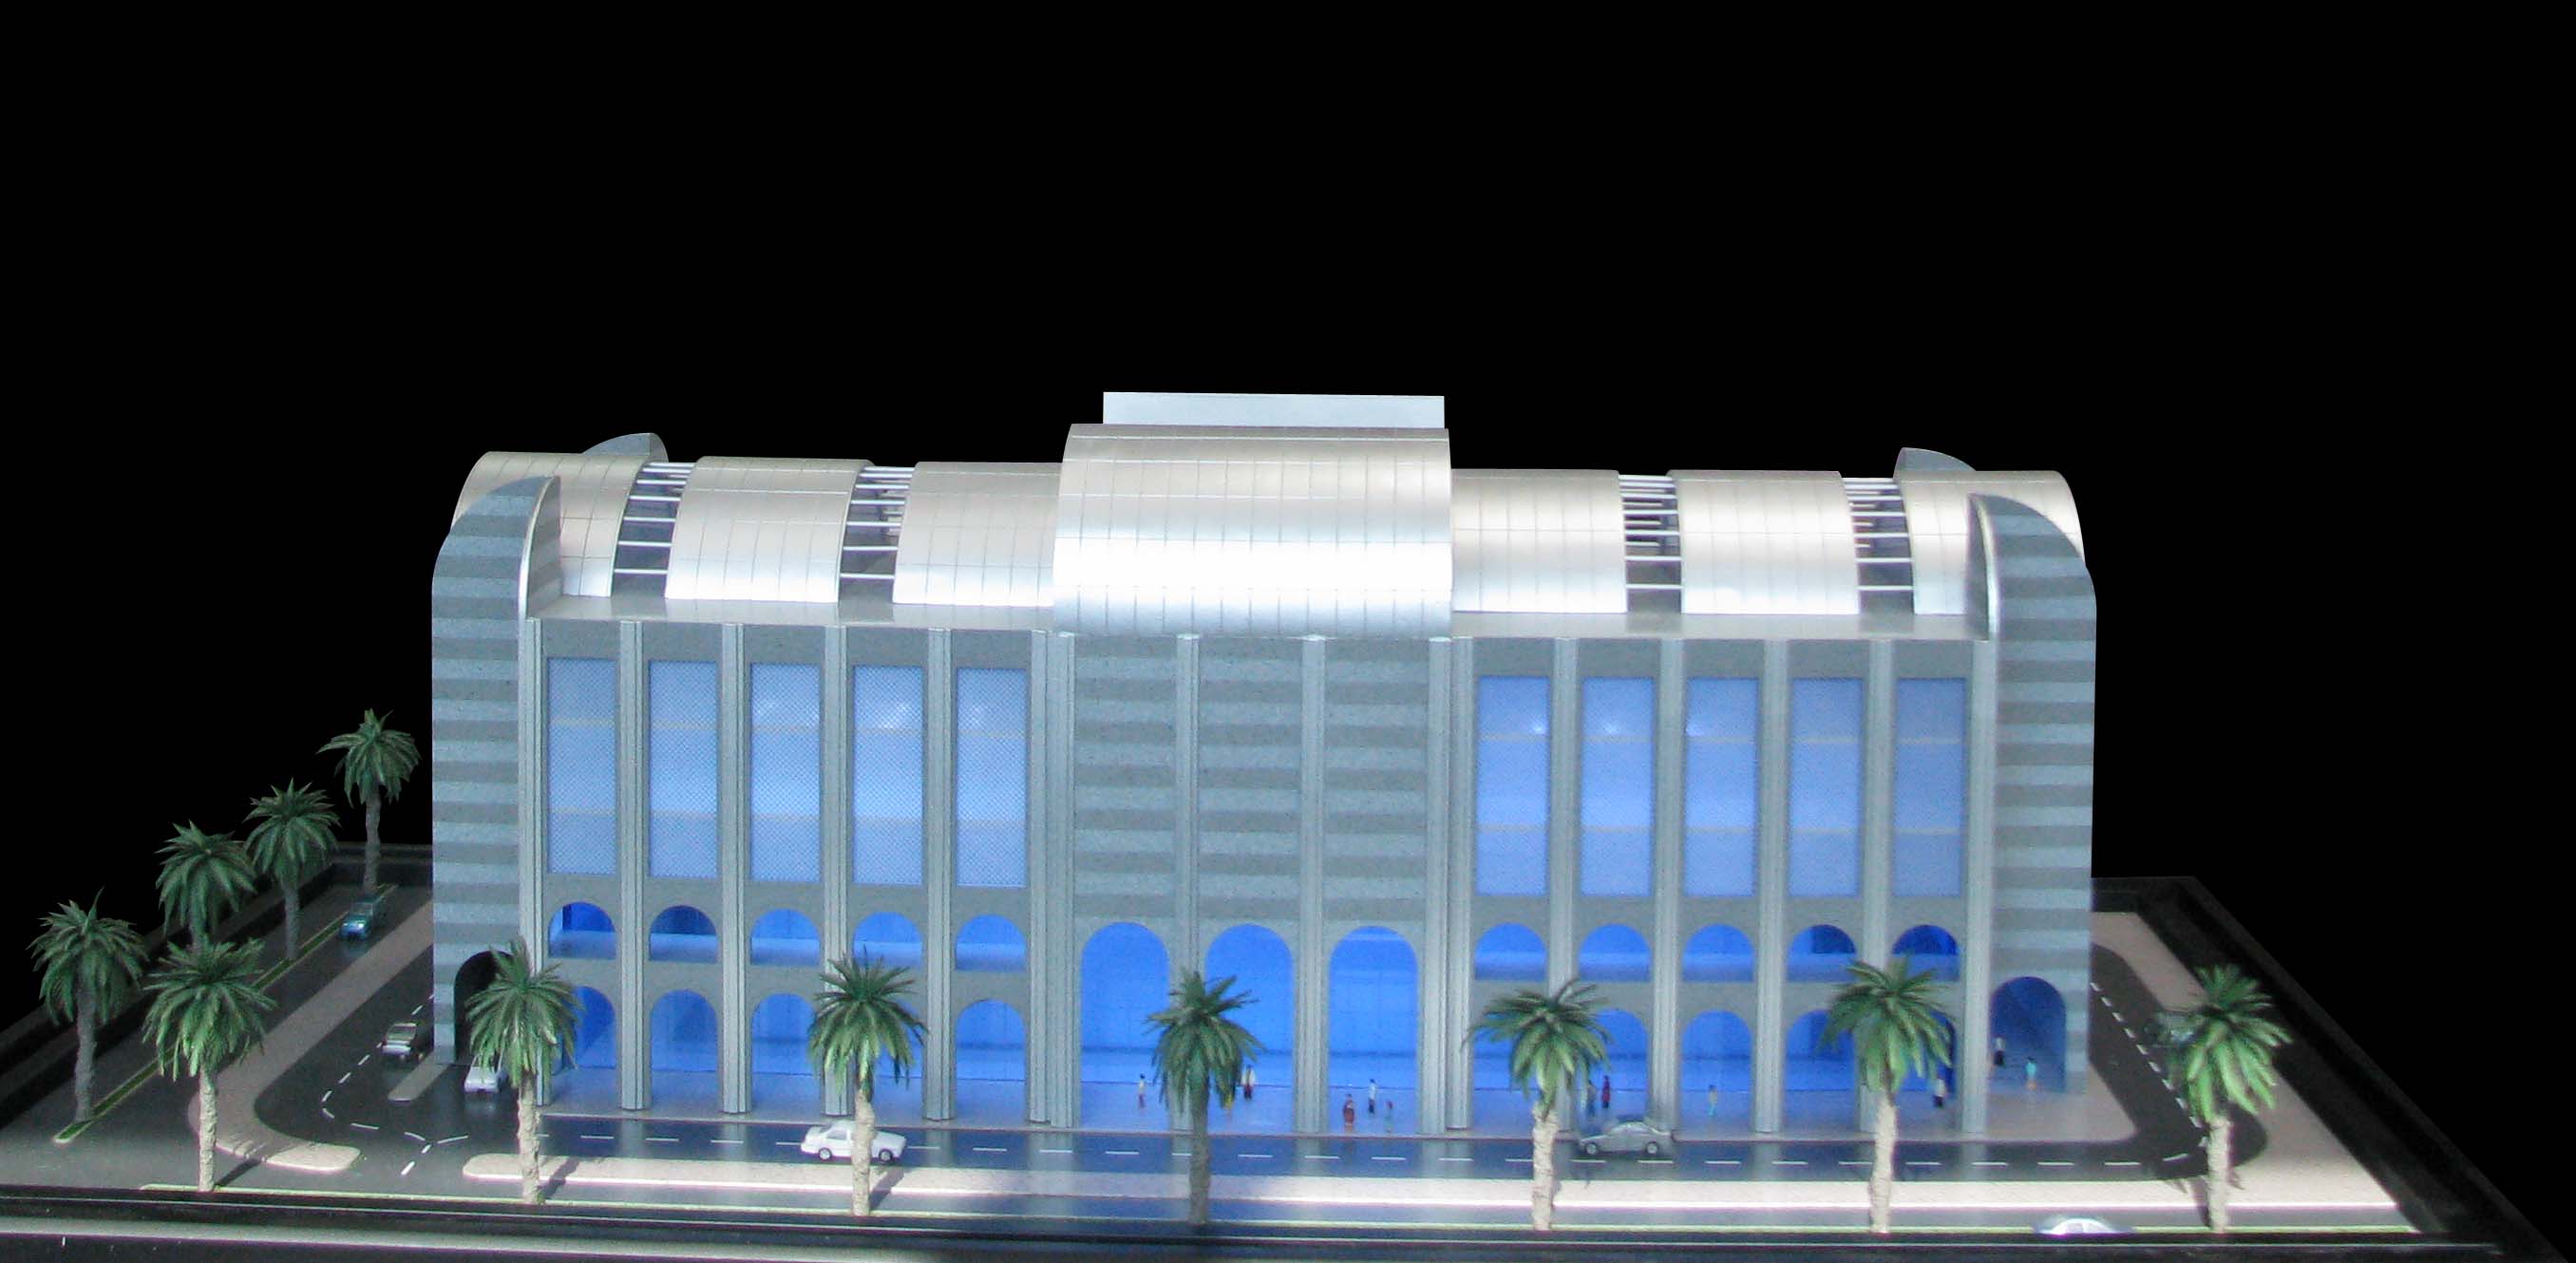 Scale Model - Architectural - Buildings - Arabian mall - UAE